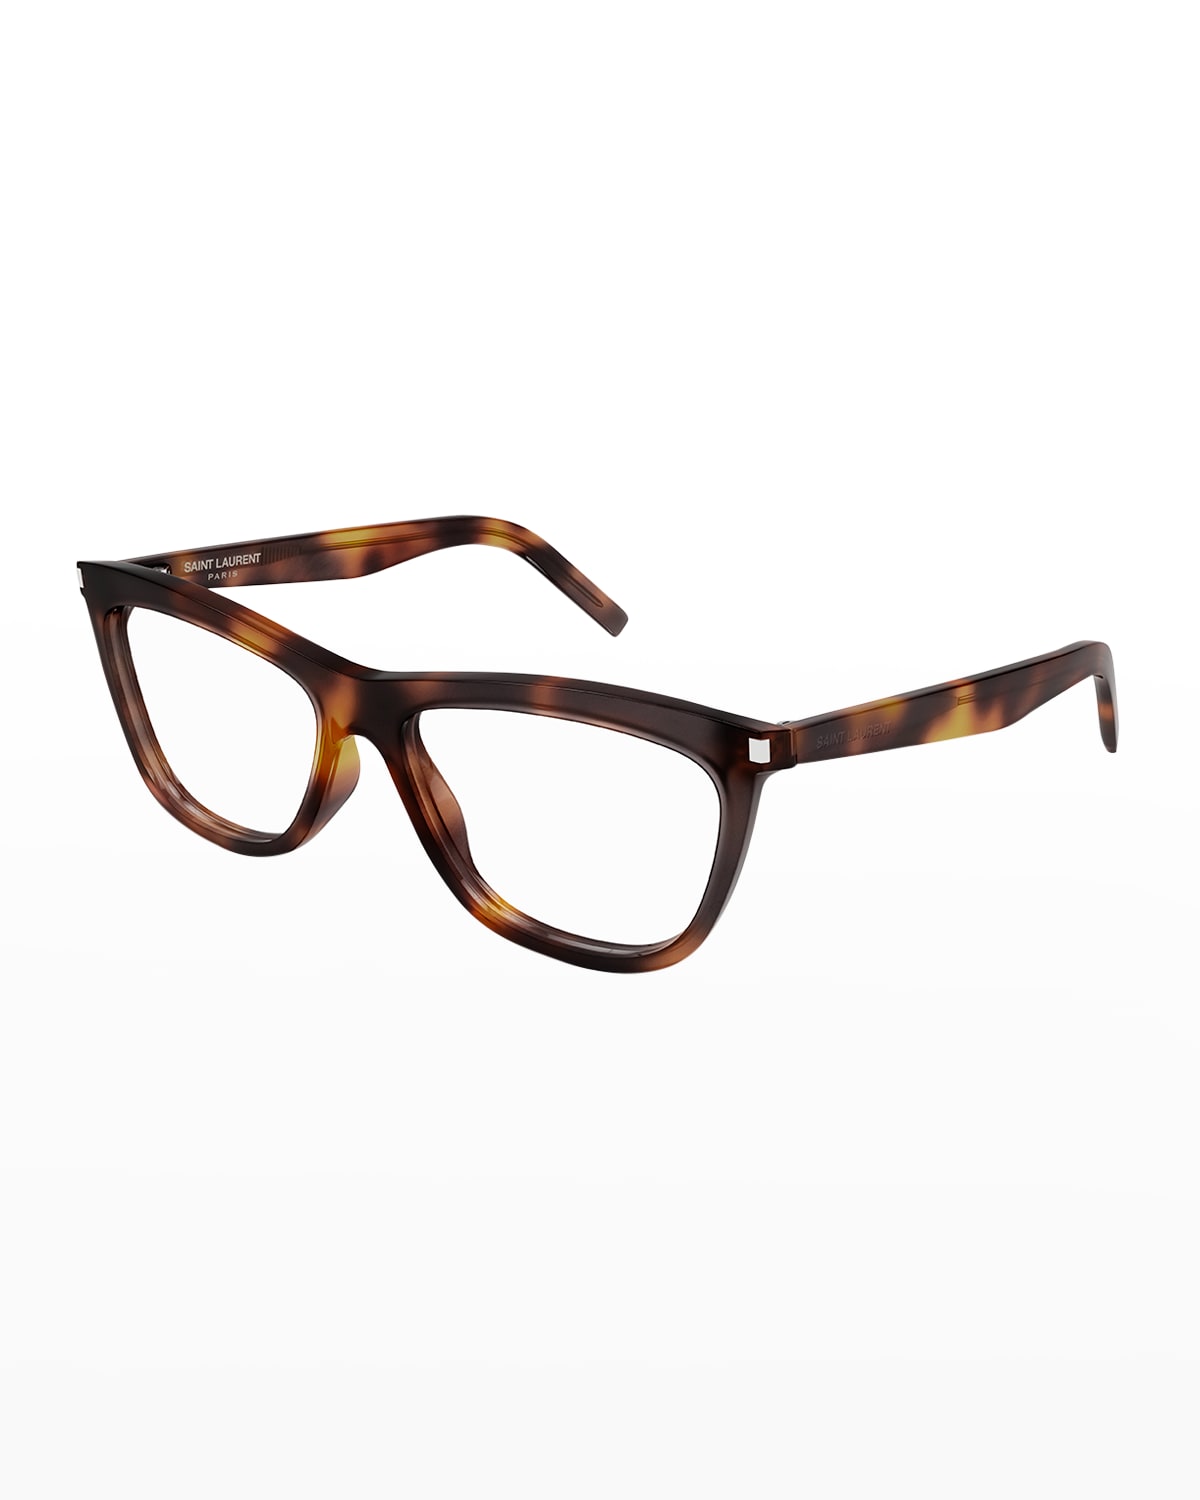 Saint Laurent Optical Acetate Cat-eye Glasses In Shiny Medium